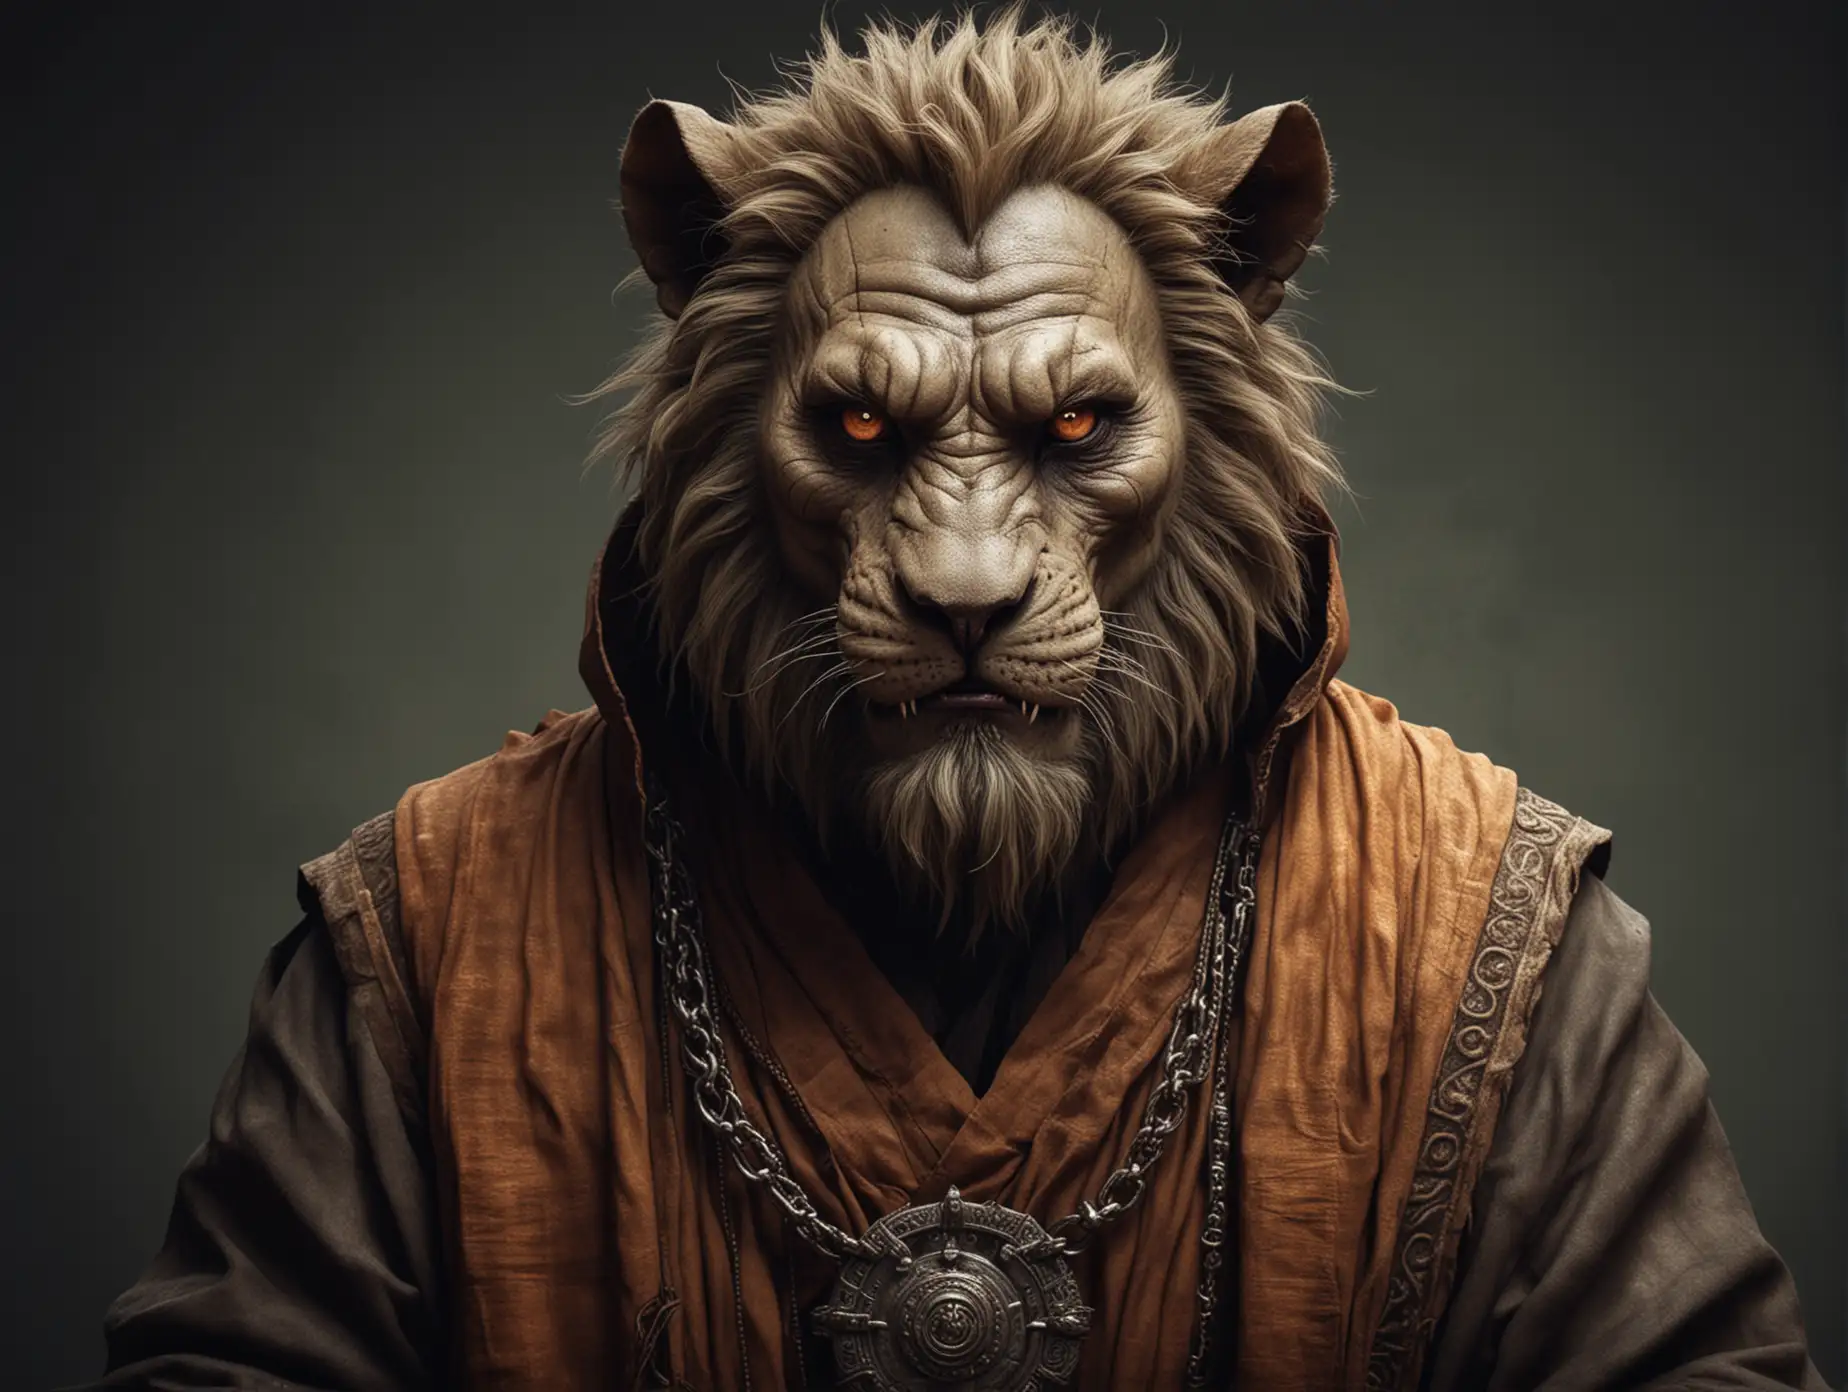 The evil anthropomorphic lion monk